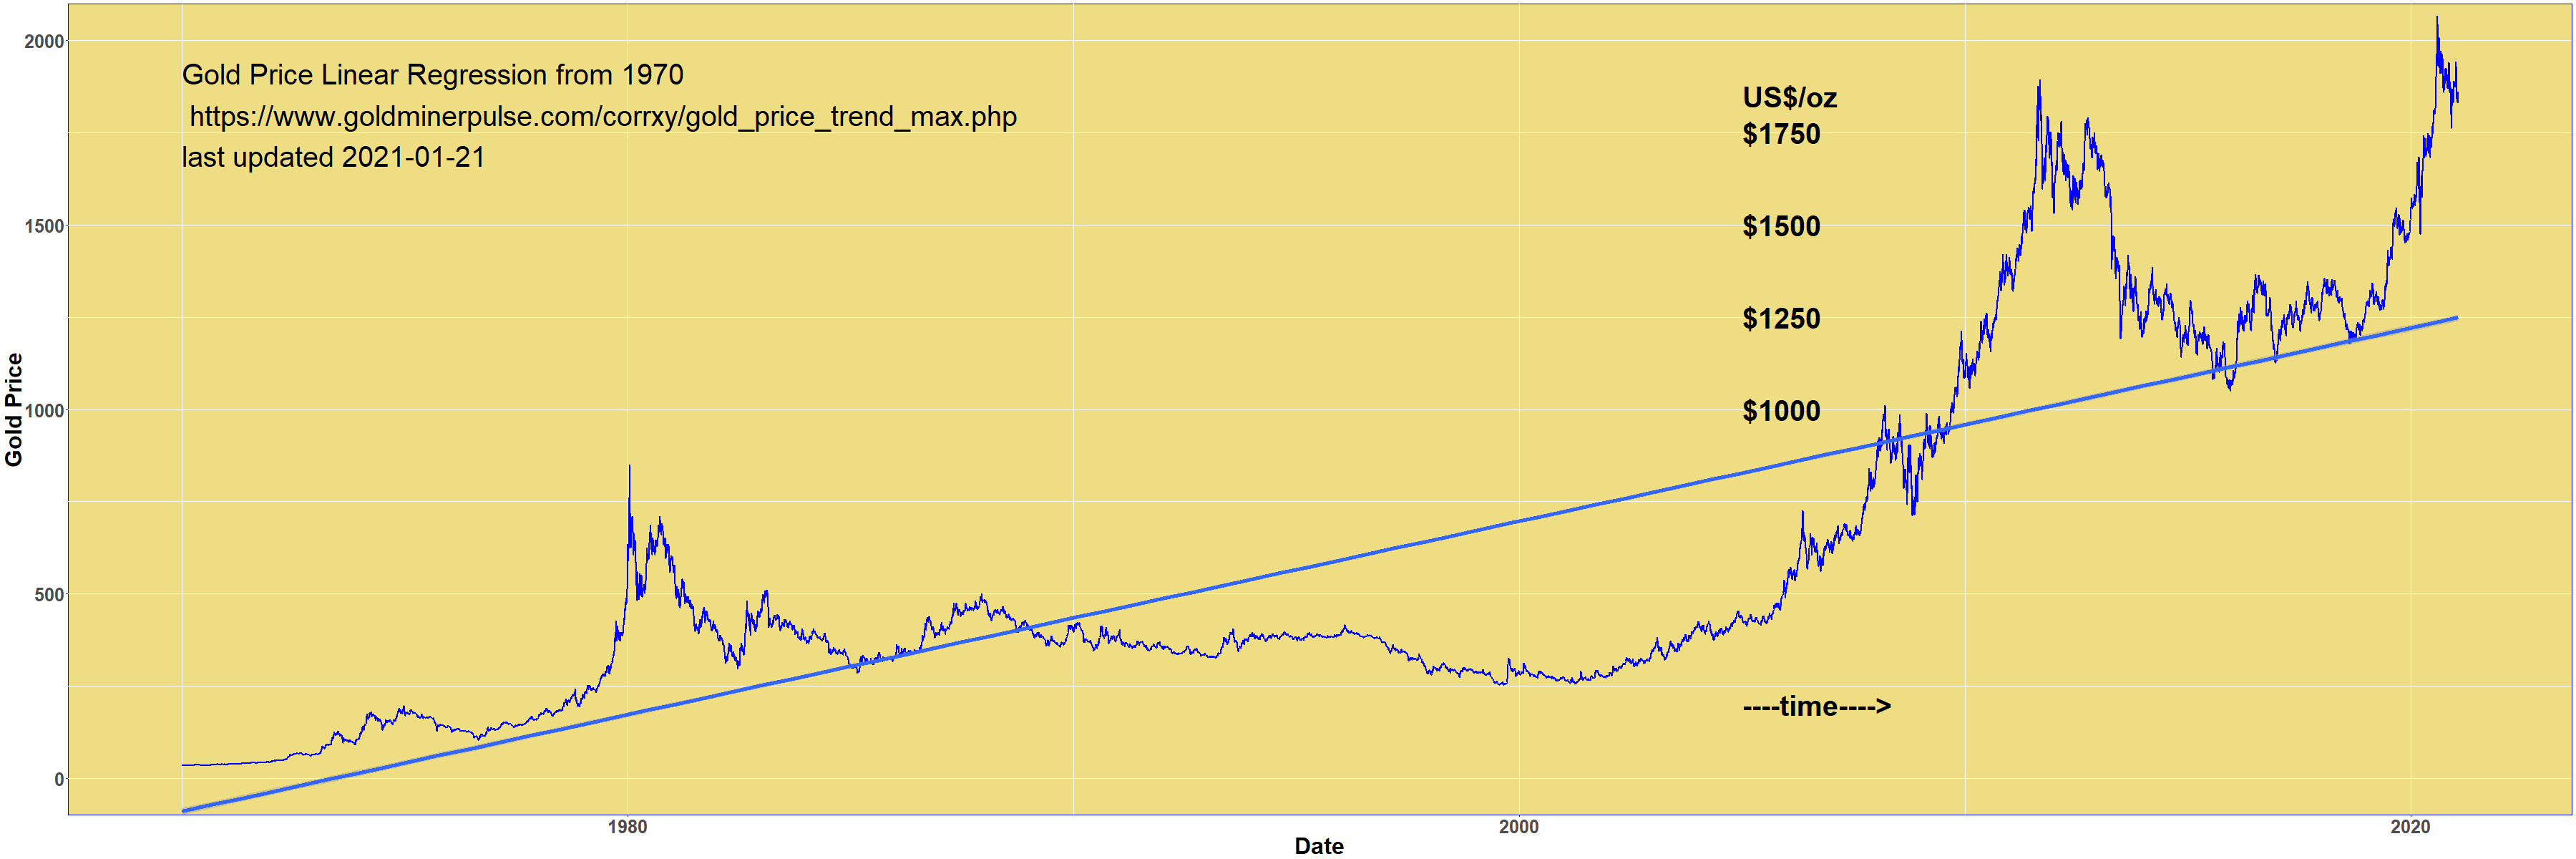 Gold Price Linear Regression Maximum Resolution